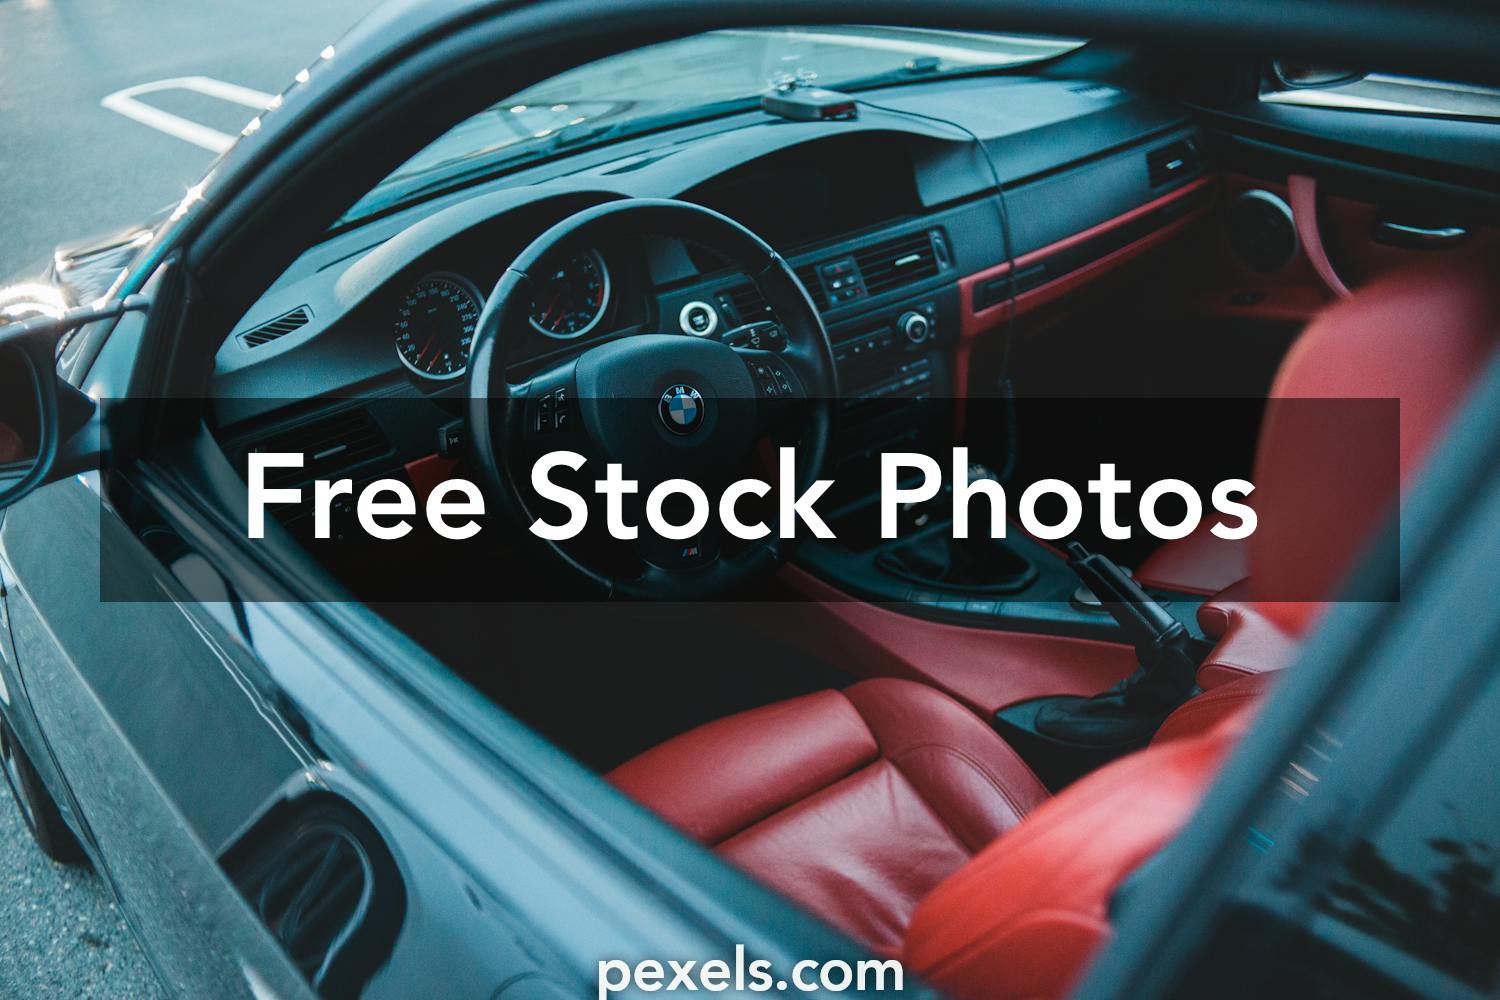 Printable Automotive Bdc Templates Photos, Download The BEST Free